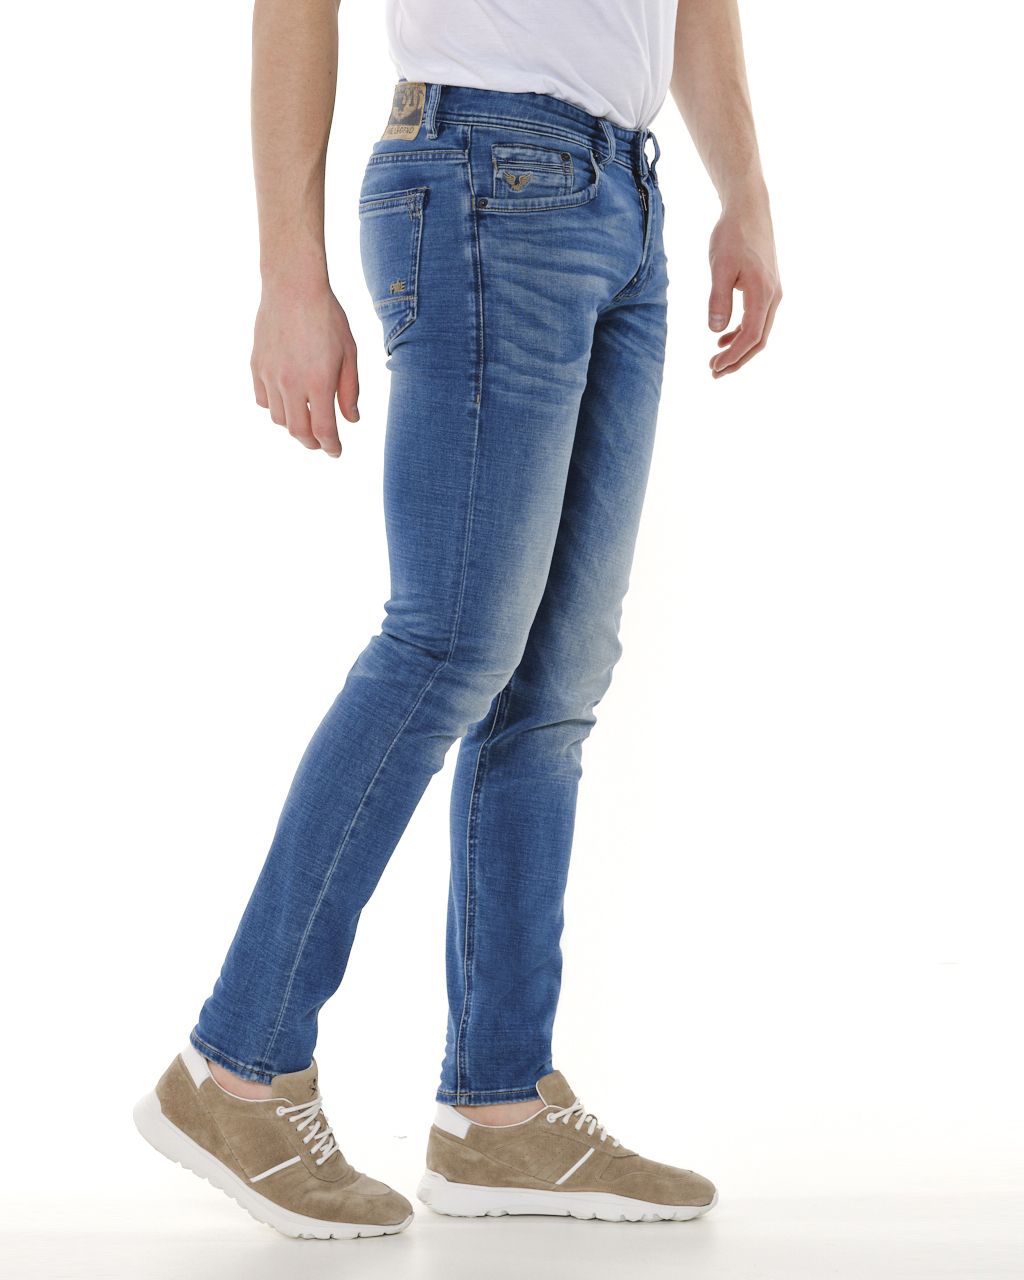 PME Legend Tailwheel Jeans | Shop nu - OFM.